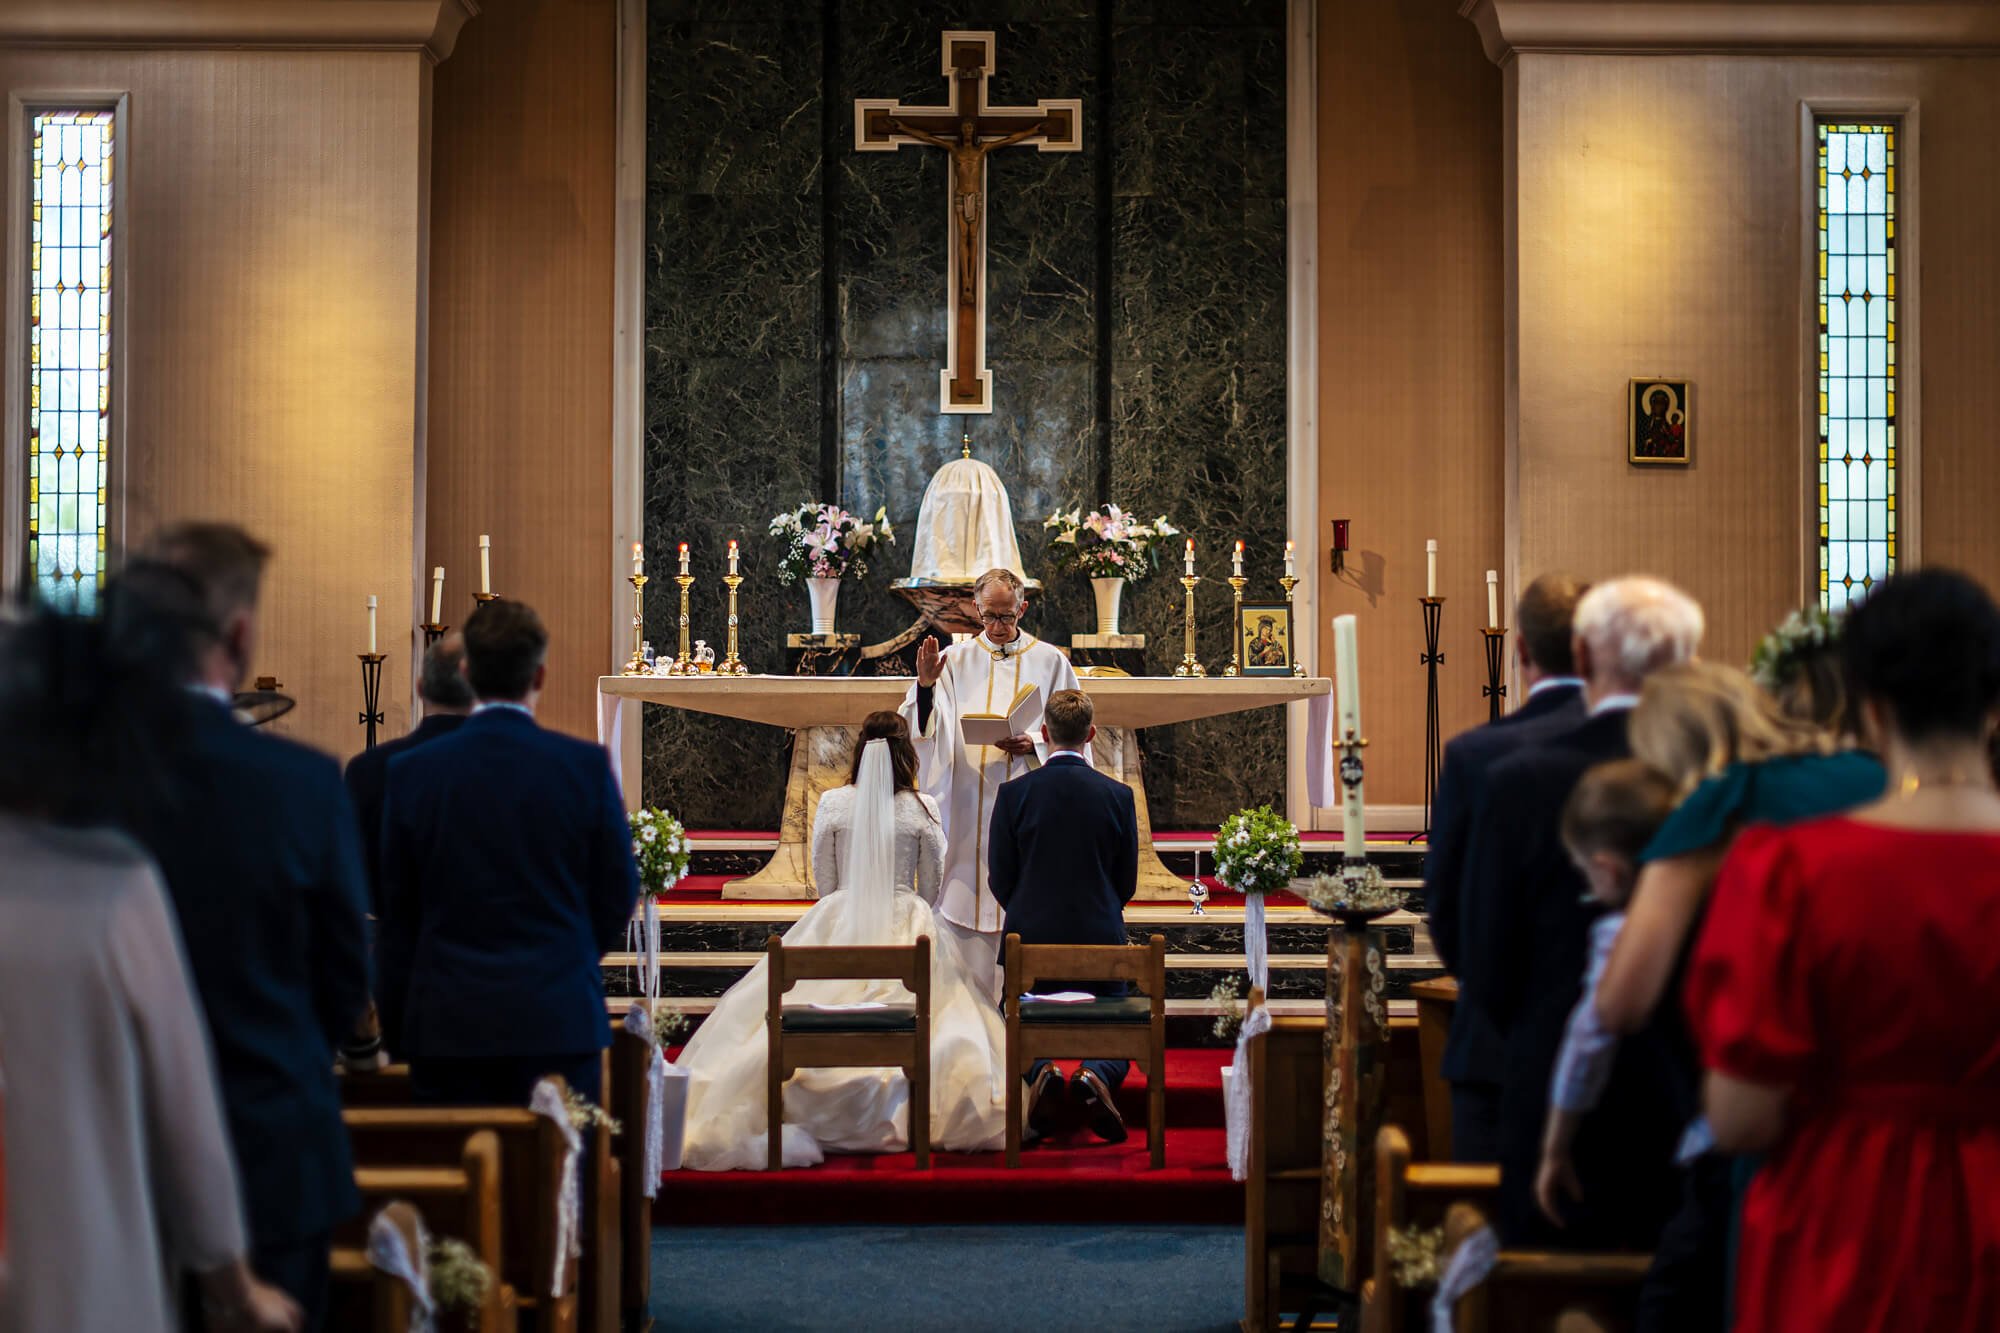 Wedding service at a Catholic church in Leeds